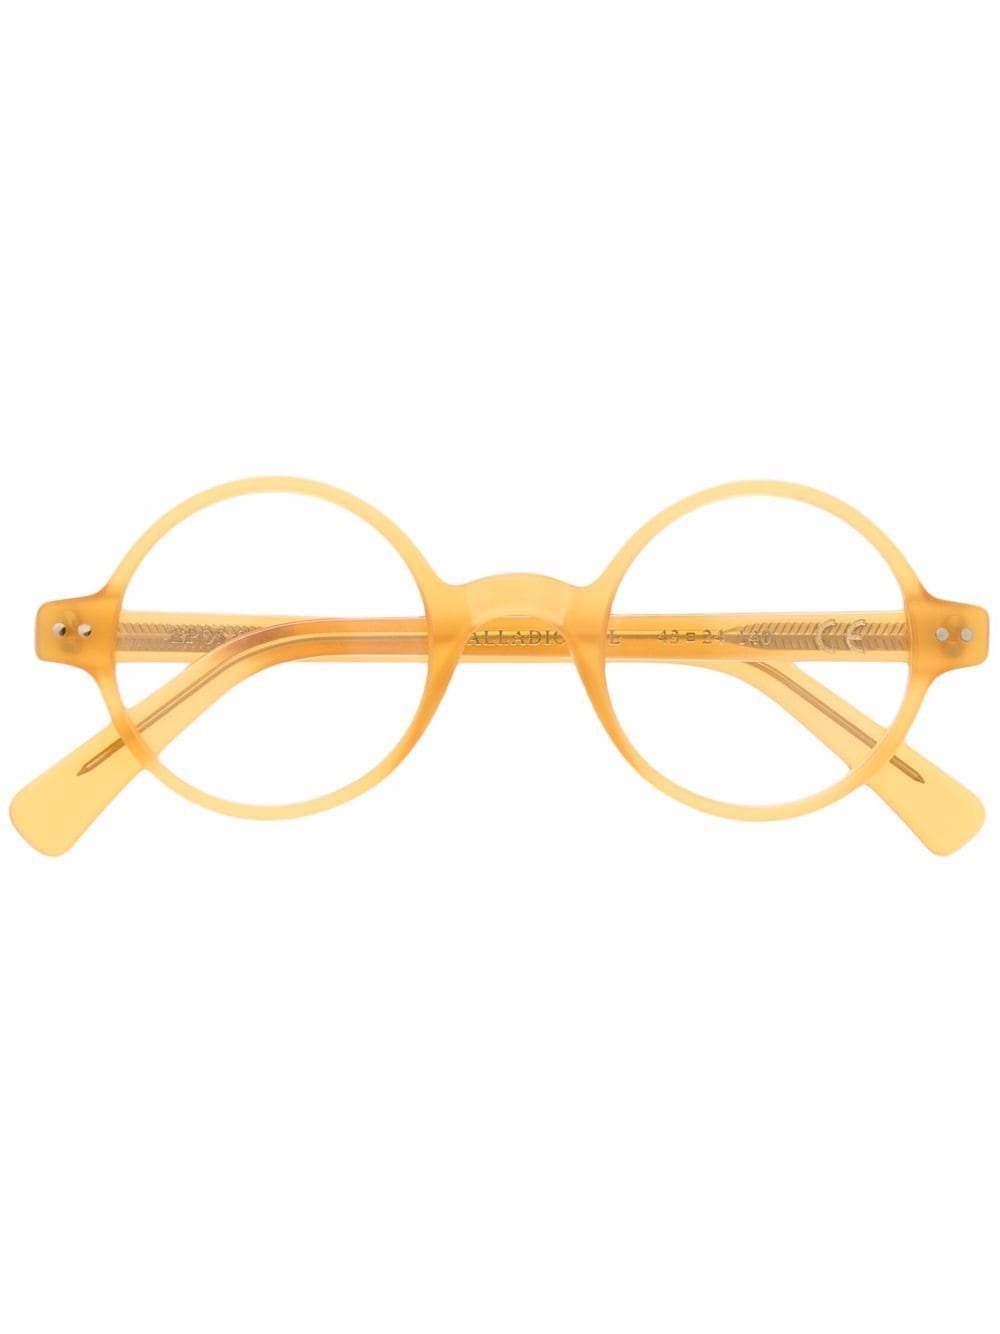 epos lunettes de vue palladio à monture ronde - jaune